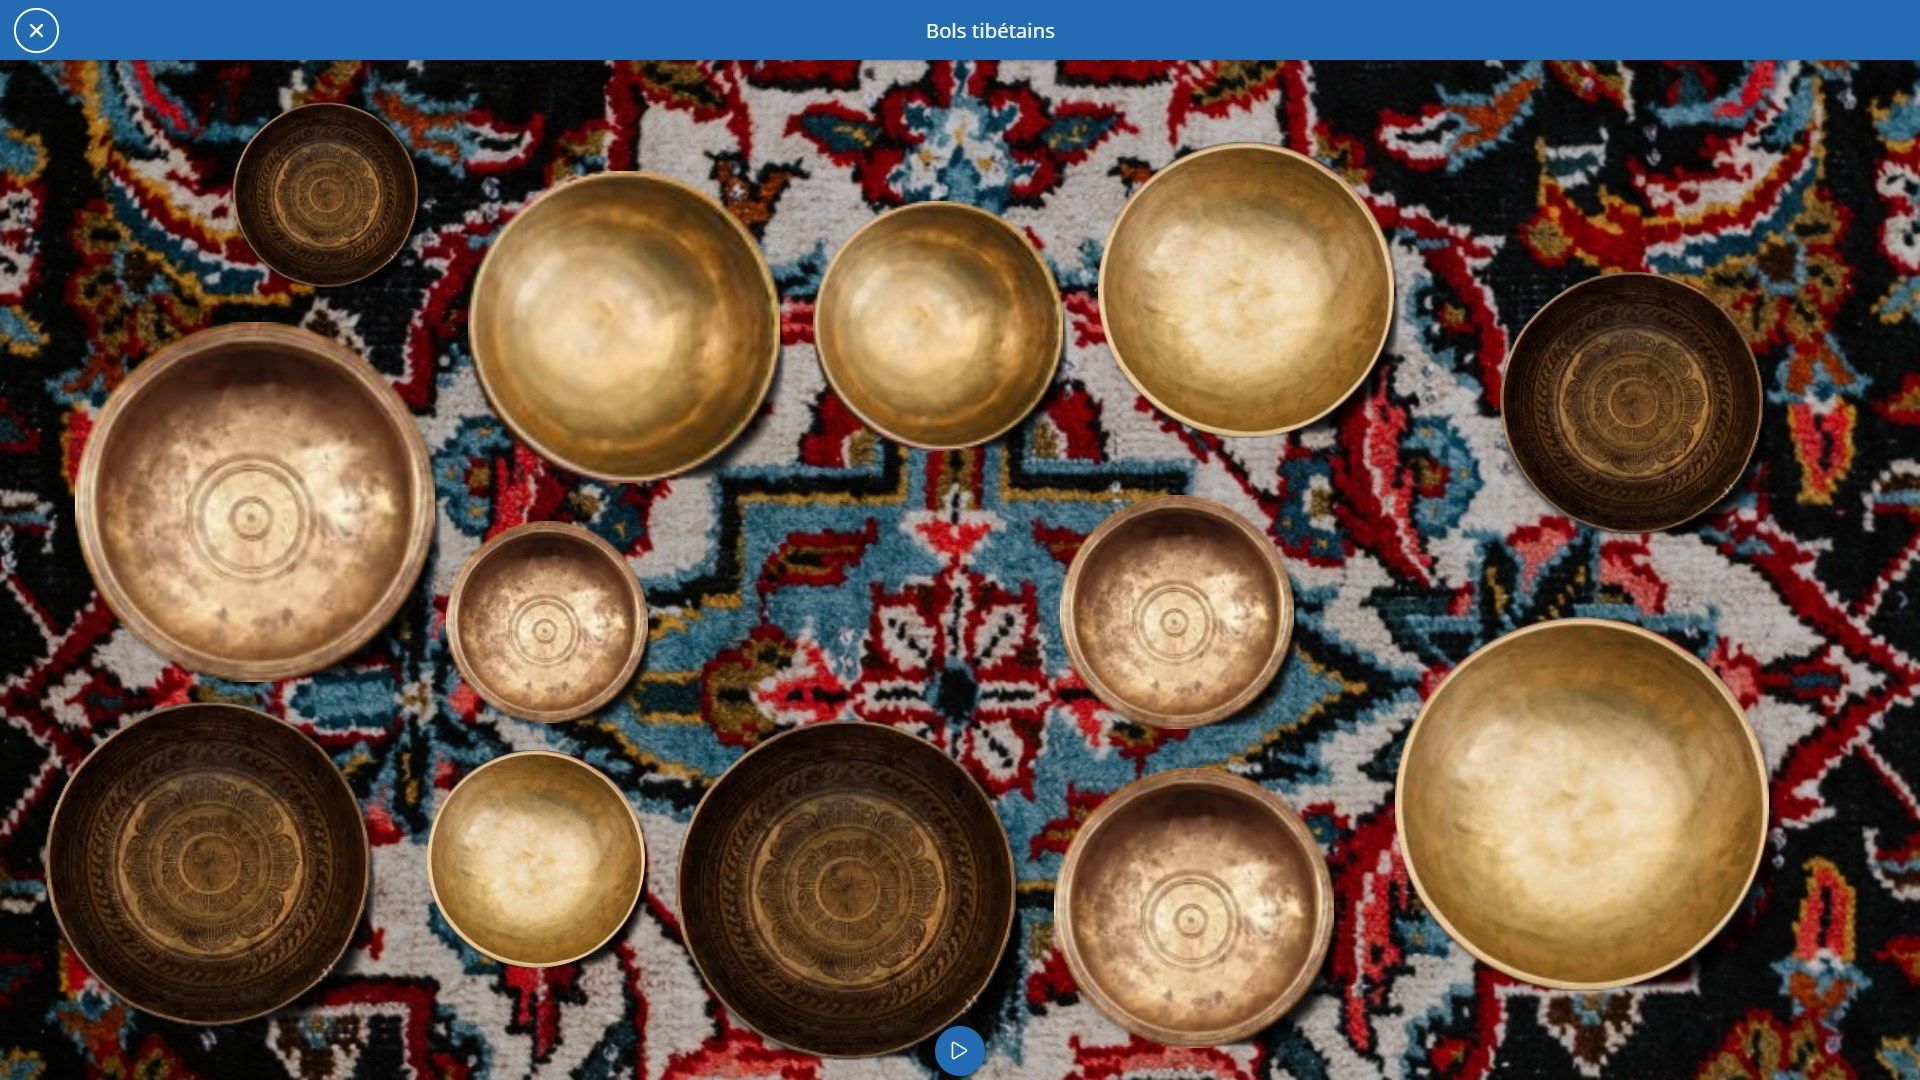 Musicothérapie - Bols tibétains